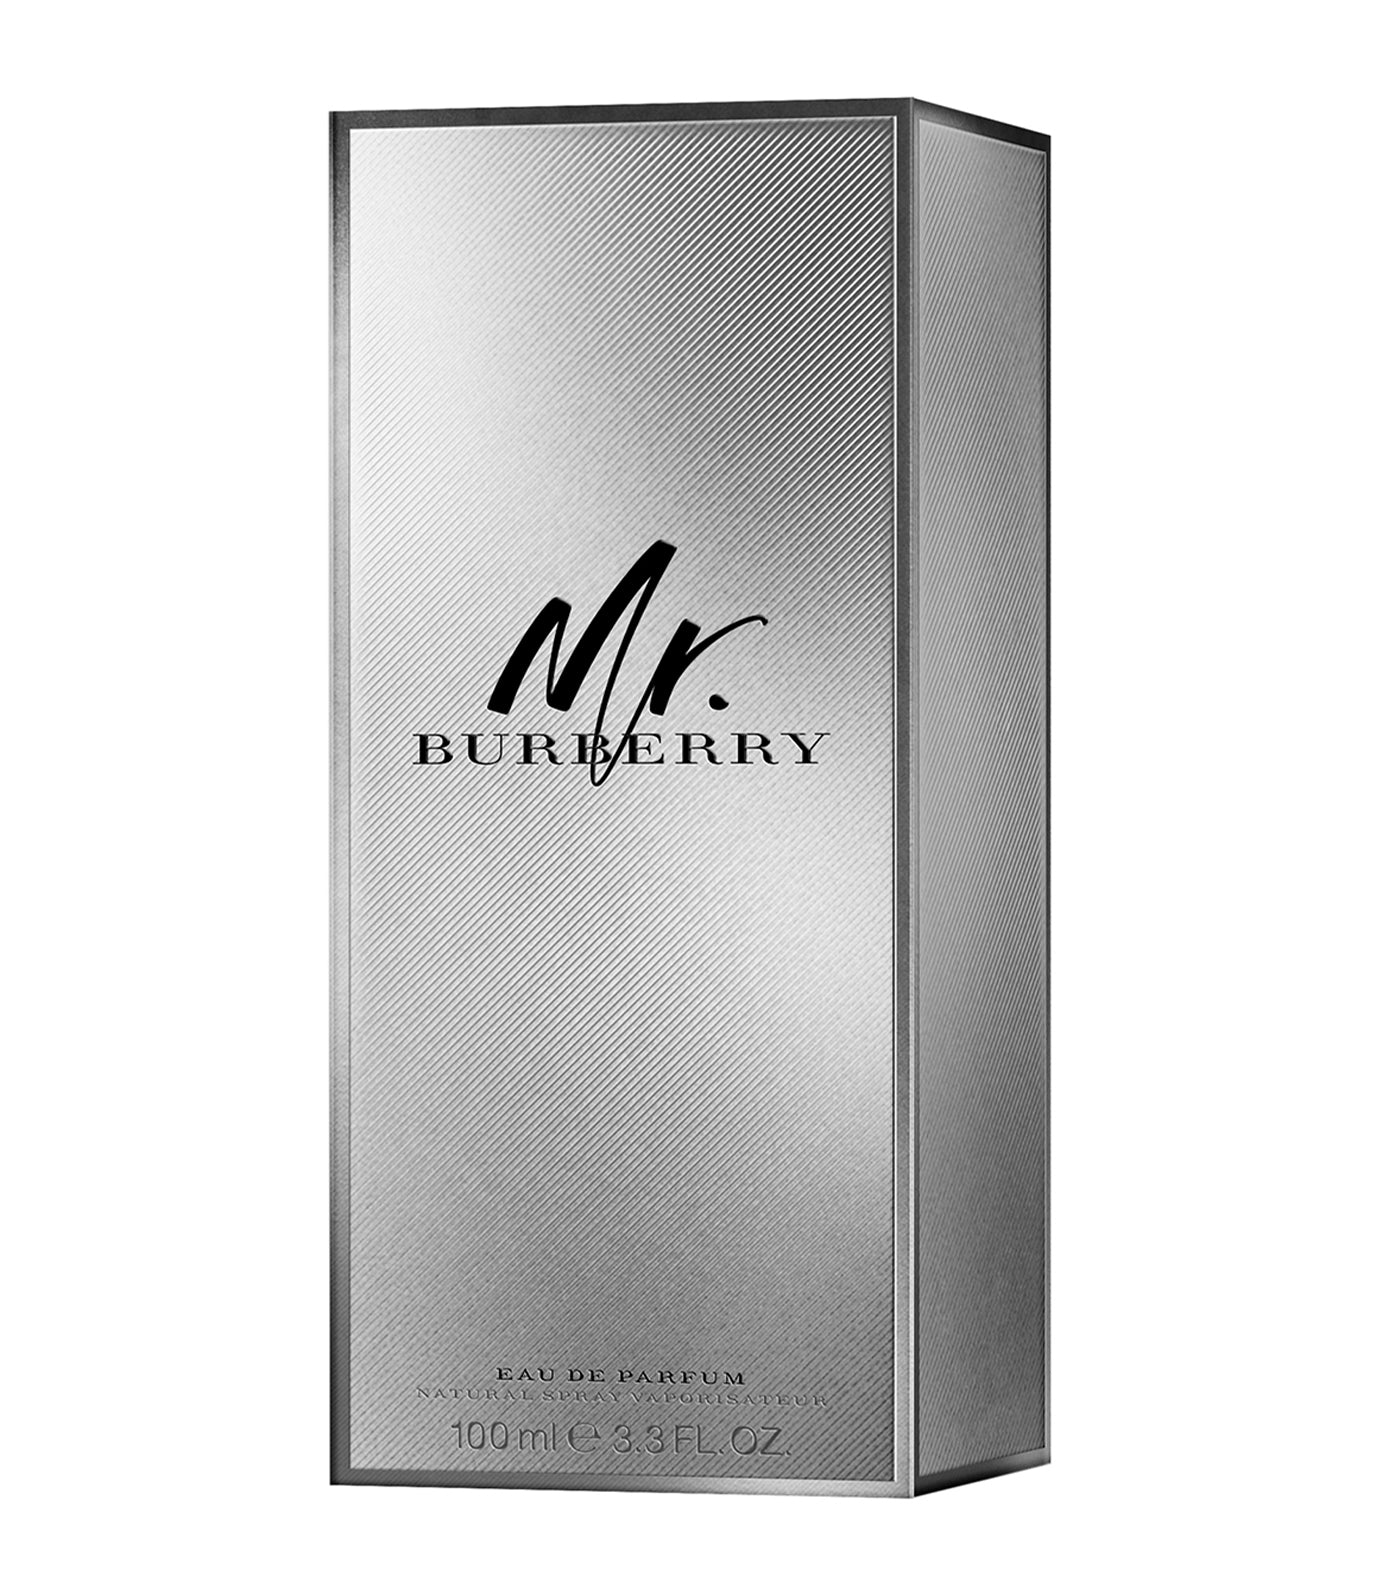 Mr. Burberry Eau de Parfum by Burberry 100ml